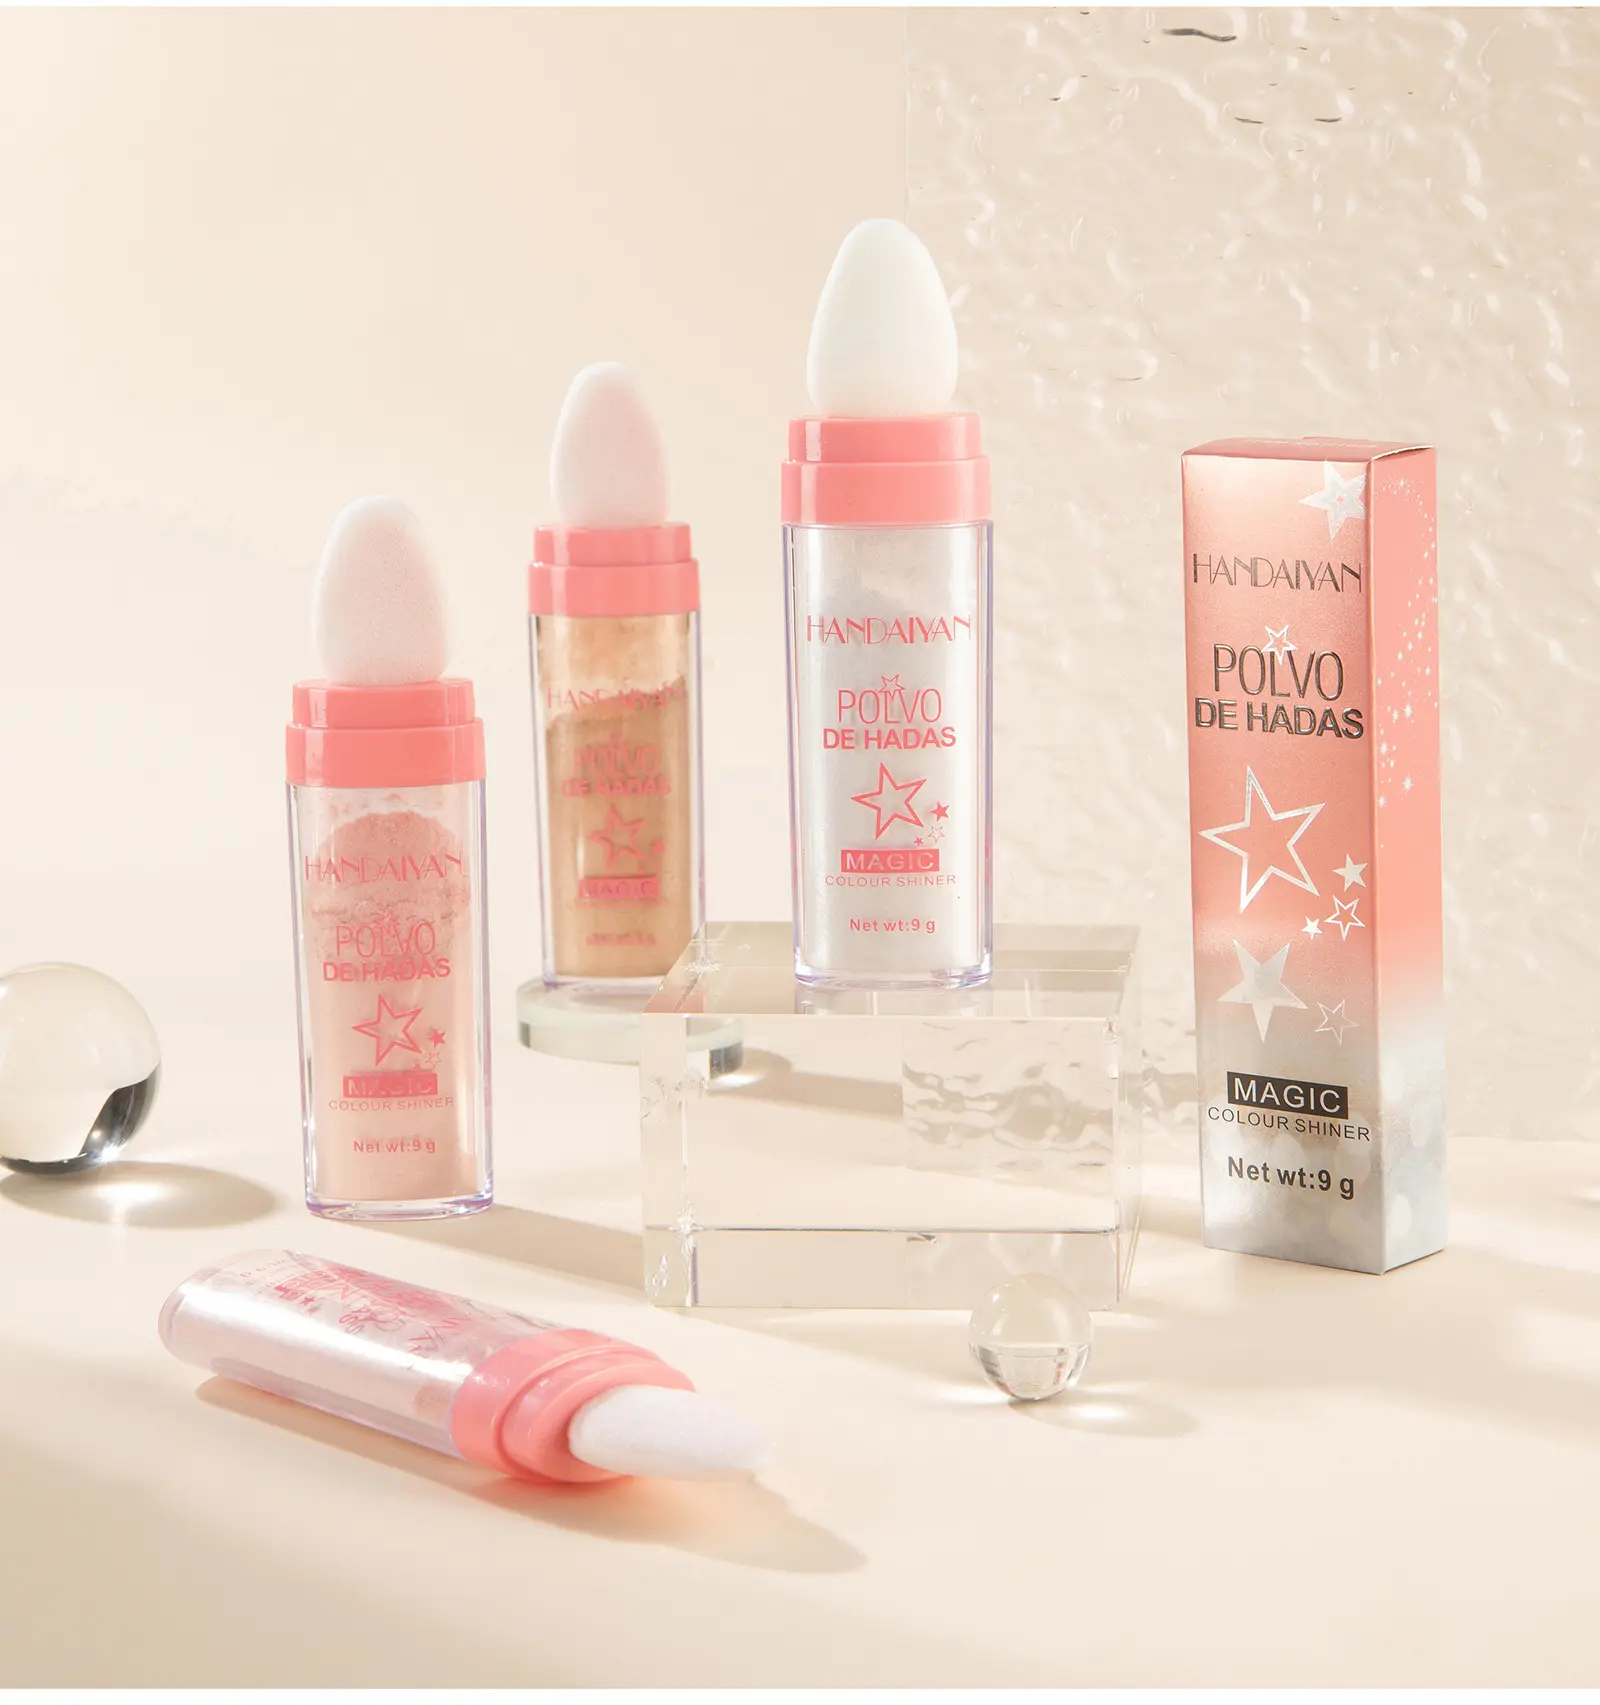 Polvo De Hadas Fairy Highlighter Powder Glitter Powder Shimmer Contour Blush Powder Makeup For Face Body Highlight Makeup